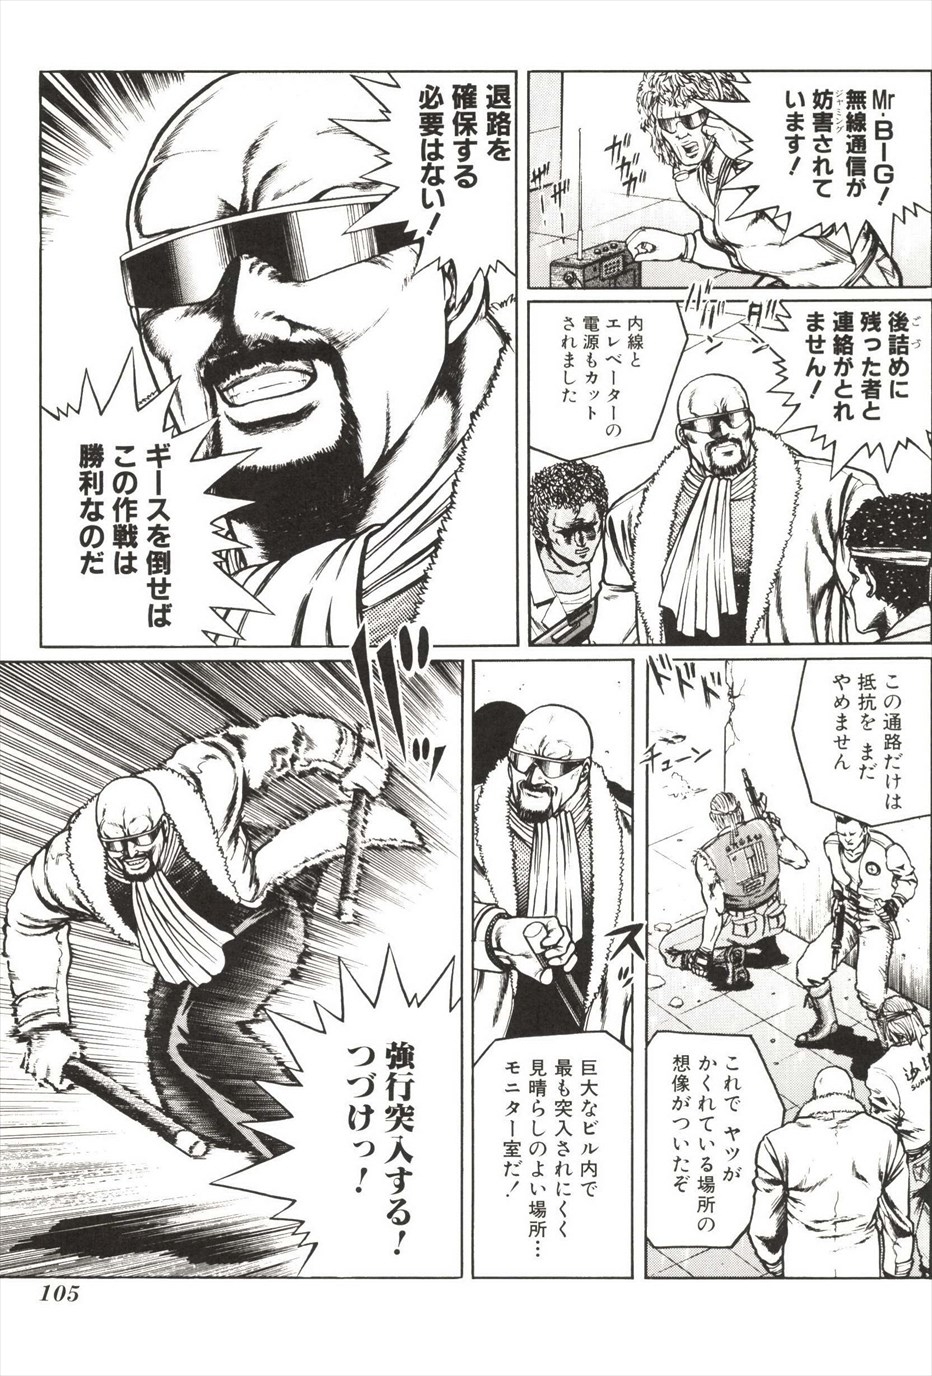 [amazishi etsuya] ART OF FIGHTING ryuuko no ken 2-2 106